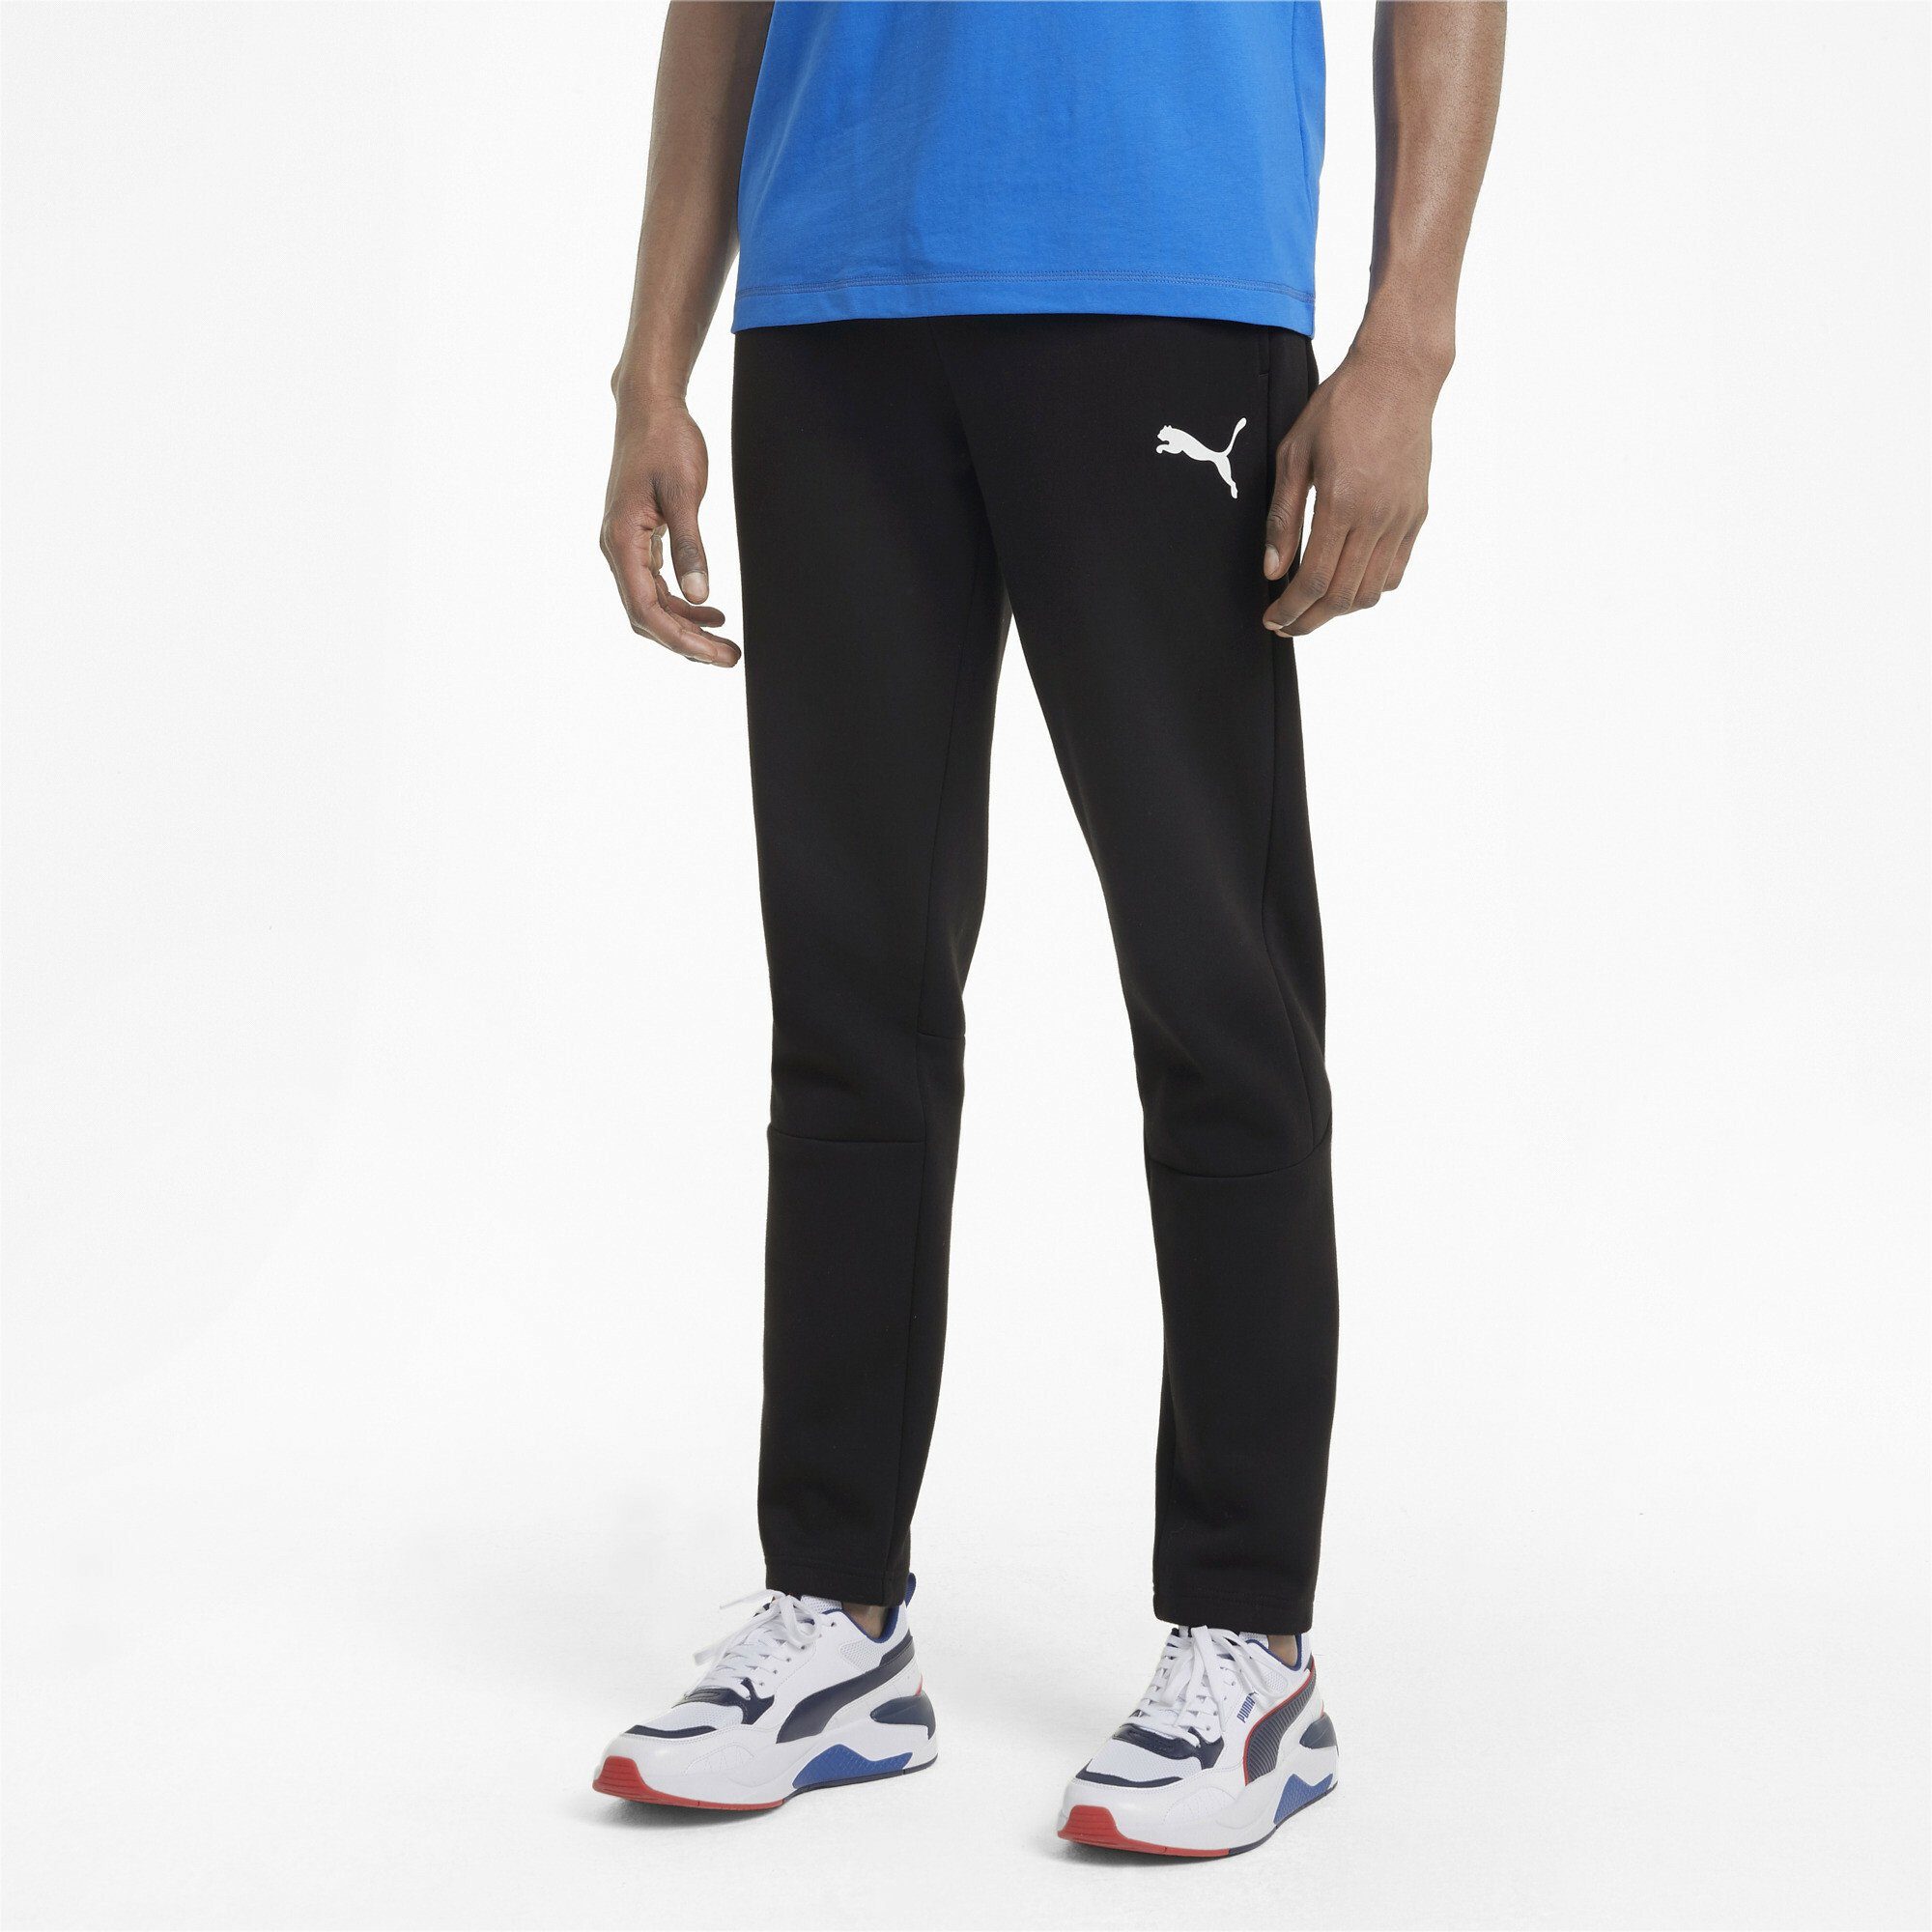 PUMA Jogginghose »Evostripe Herren Sweatpants Slim« online kaufen | OTTO